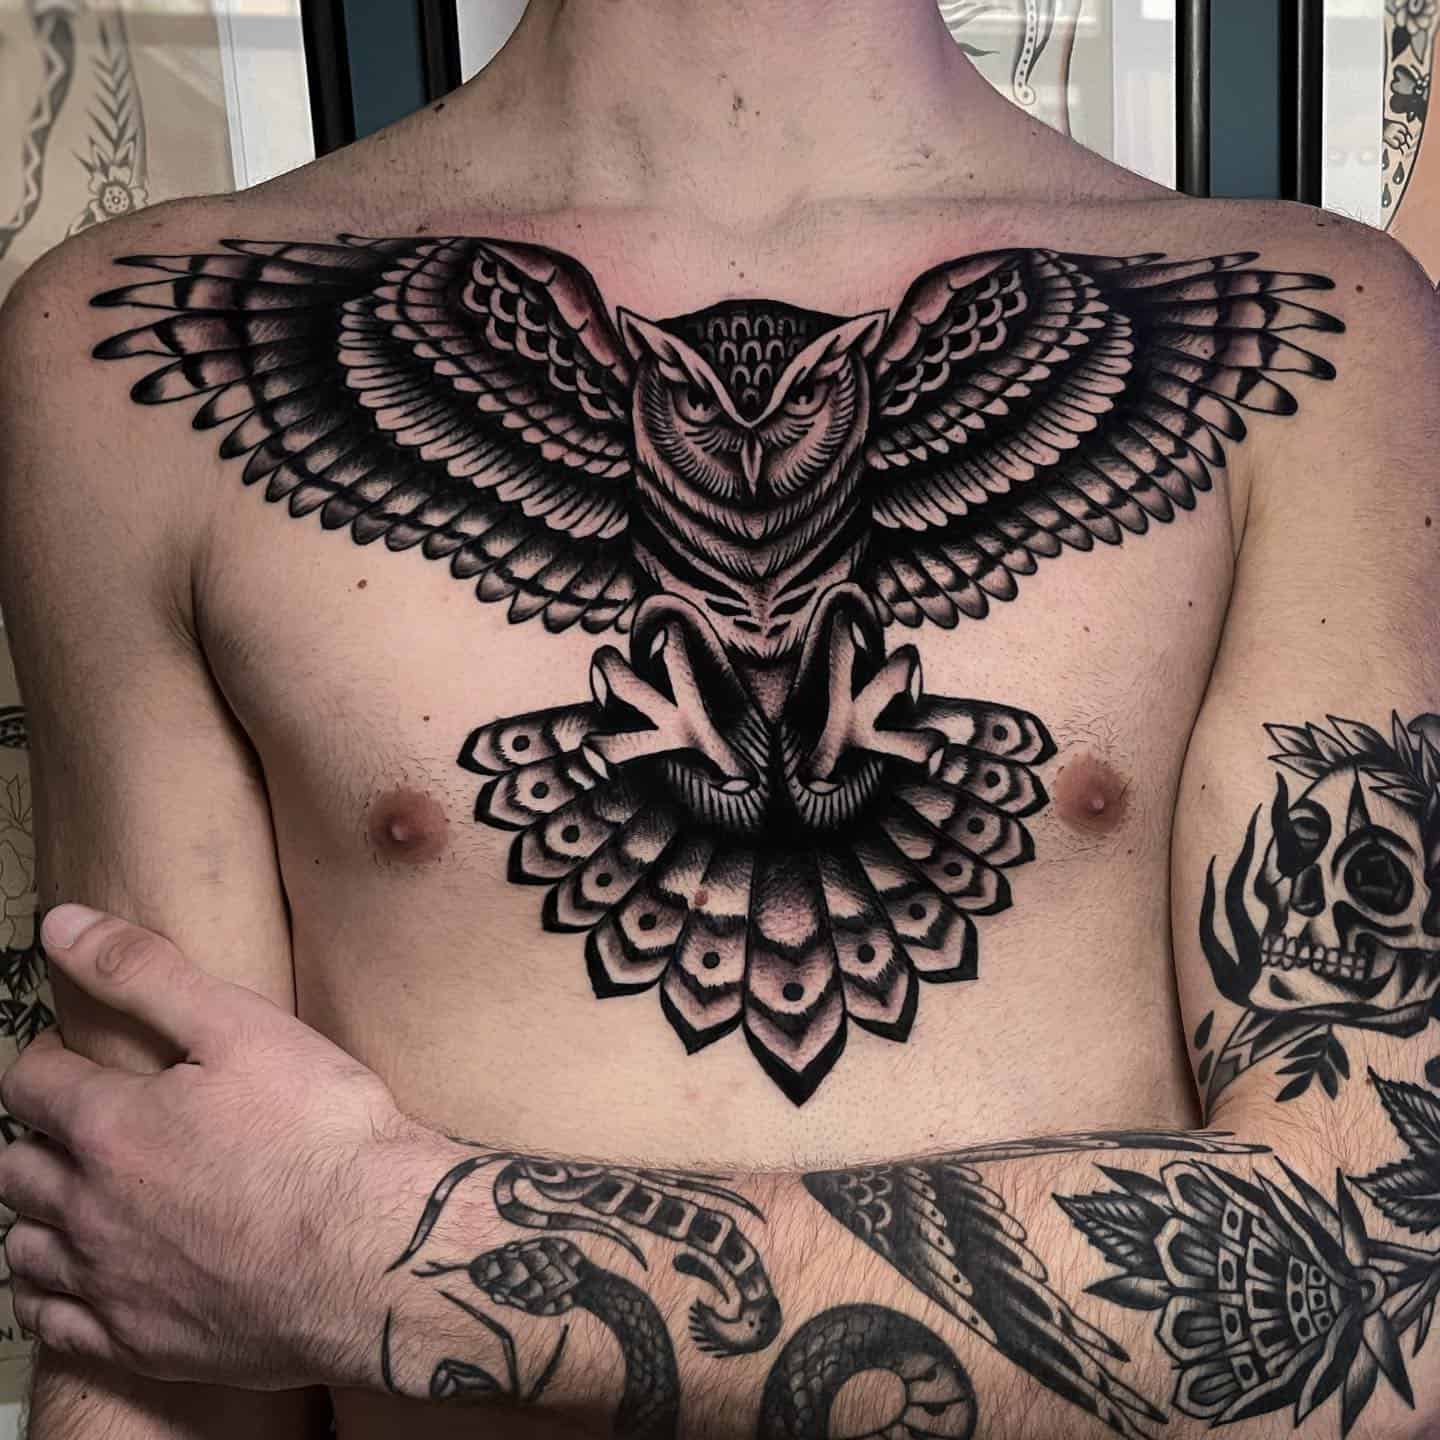 Chest owl tattoo design - Design of TattoosDesign of Tattoos